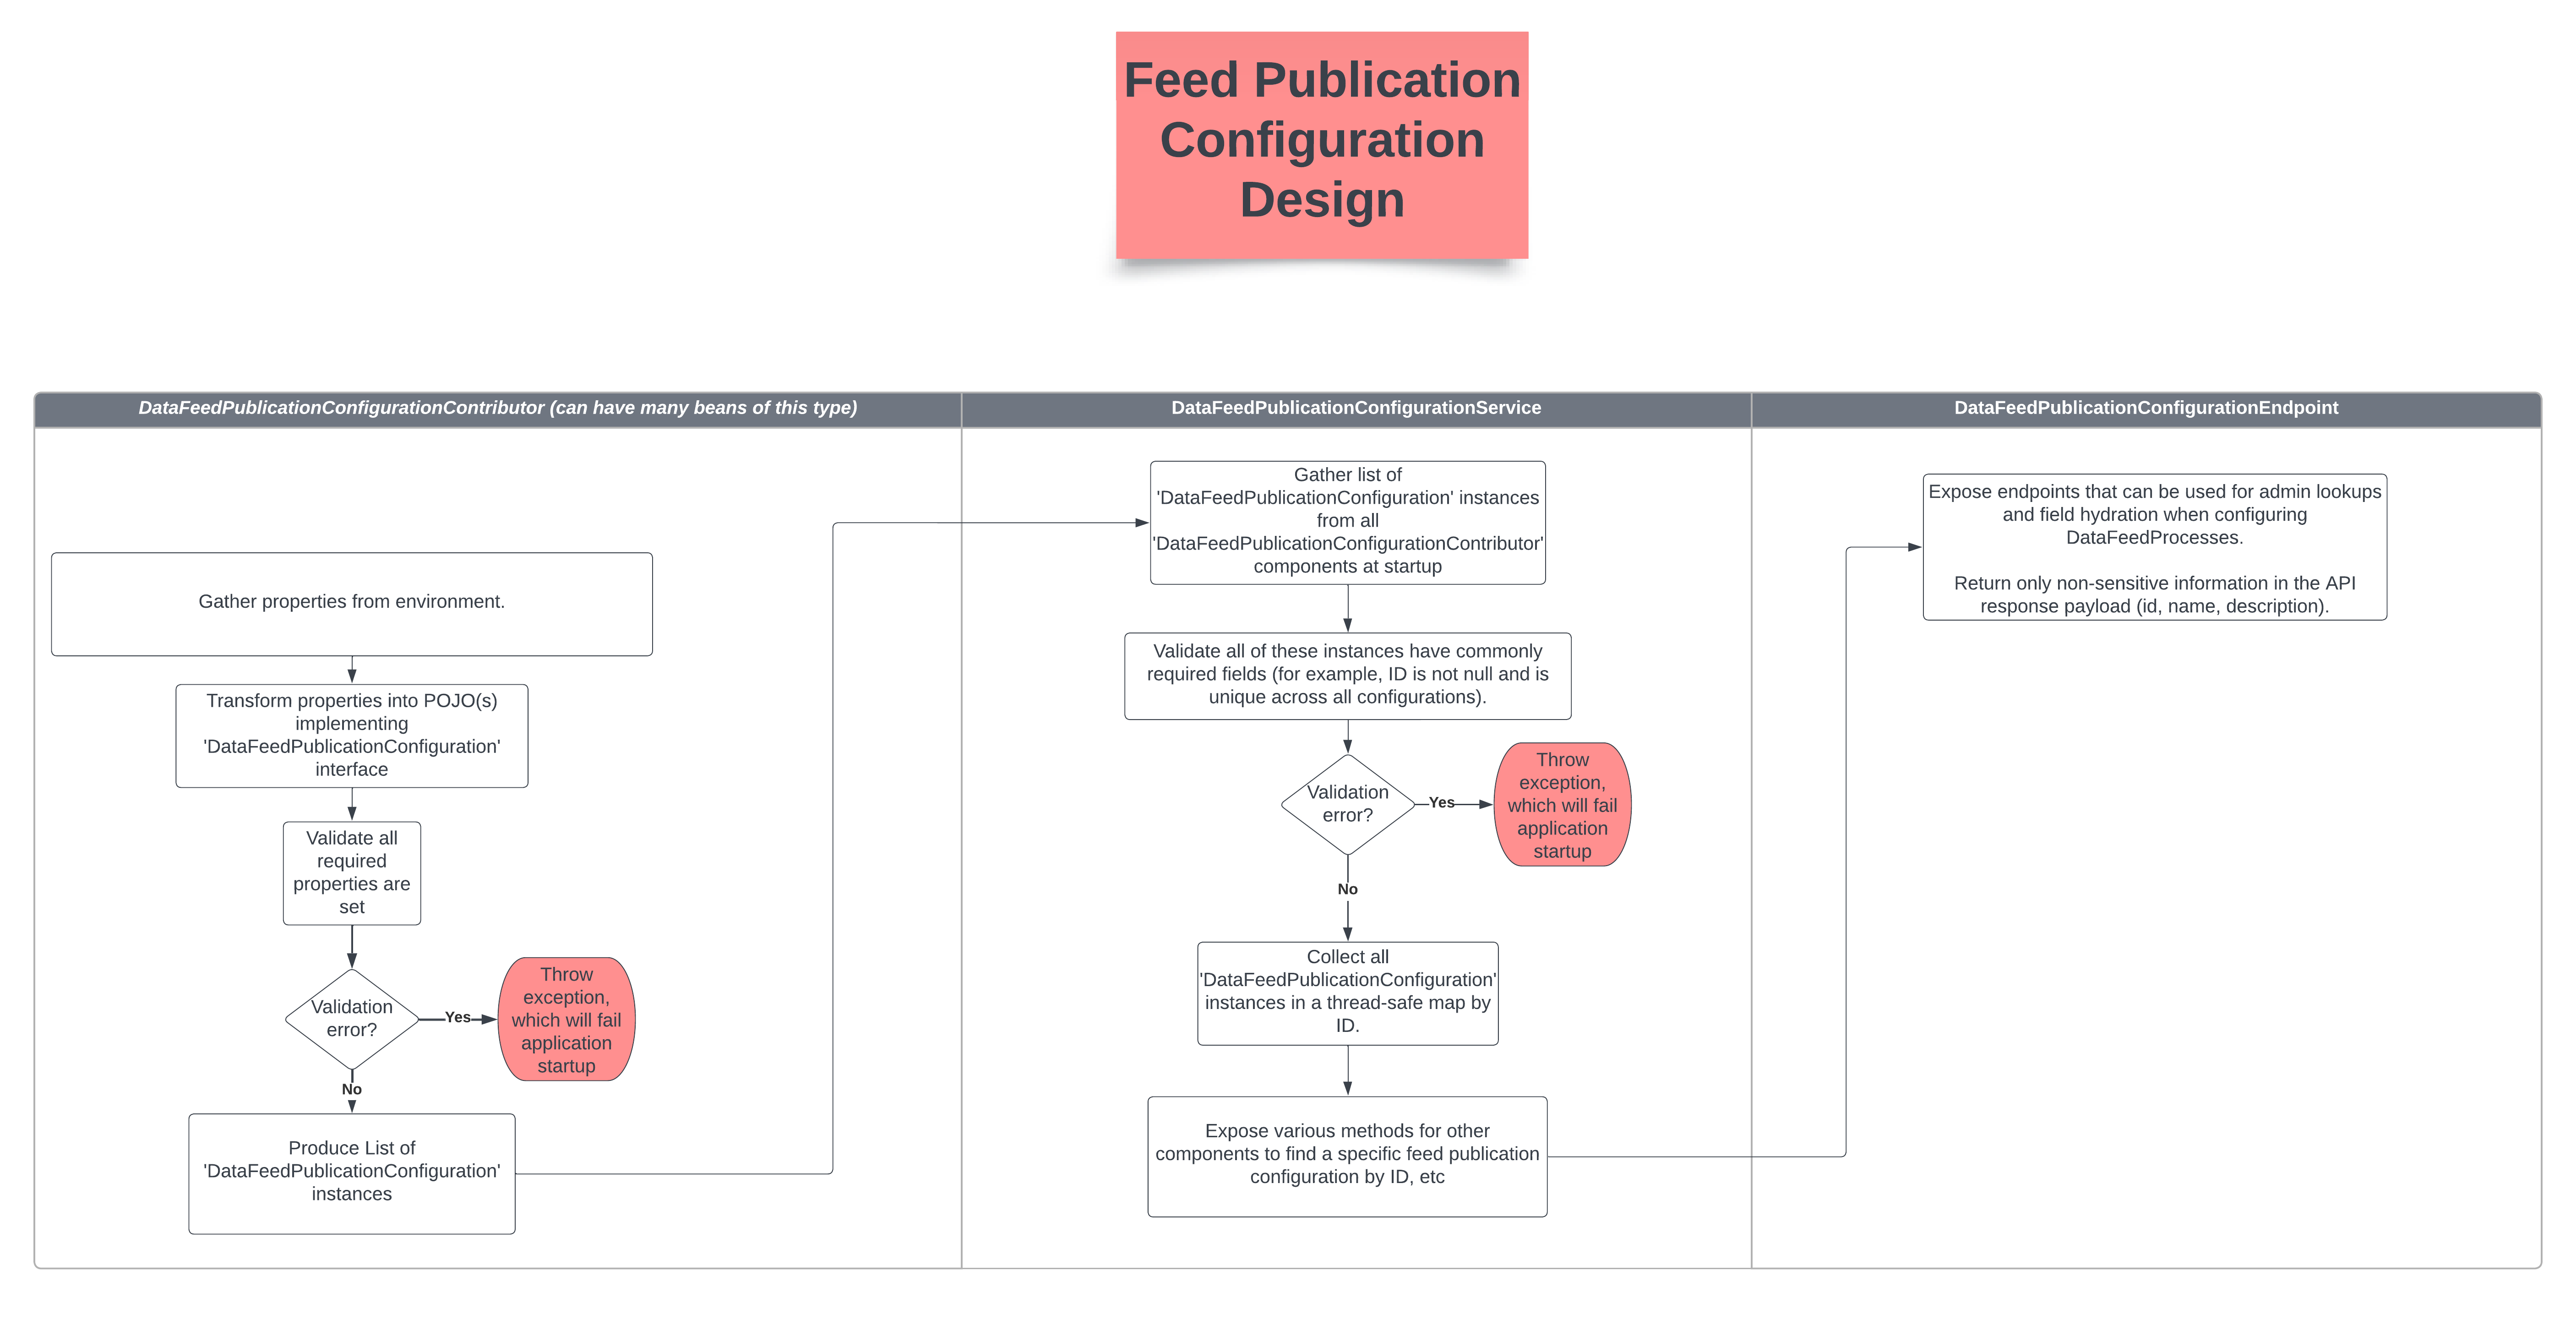 feed publication configuration design